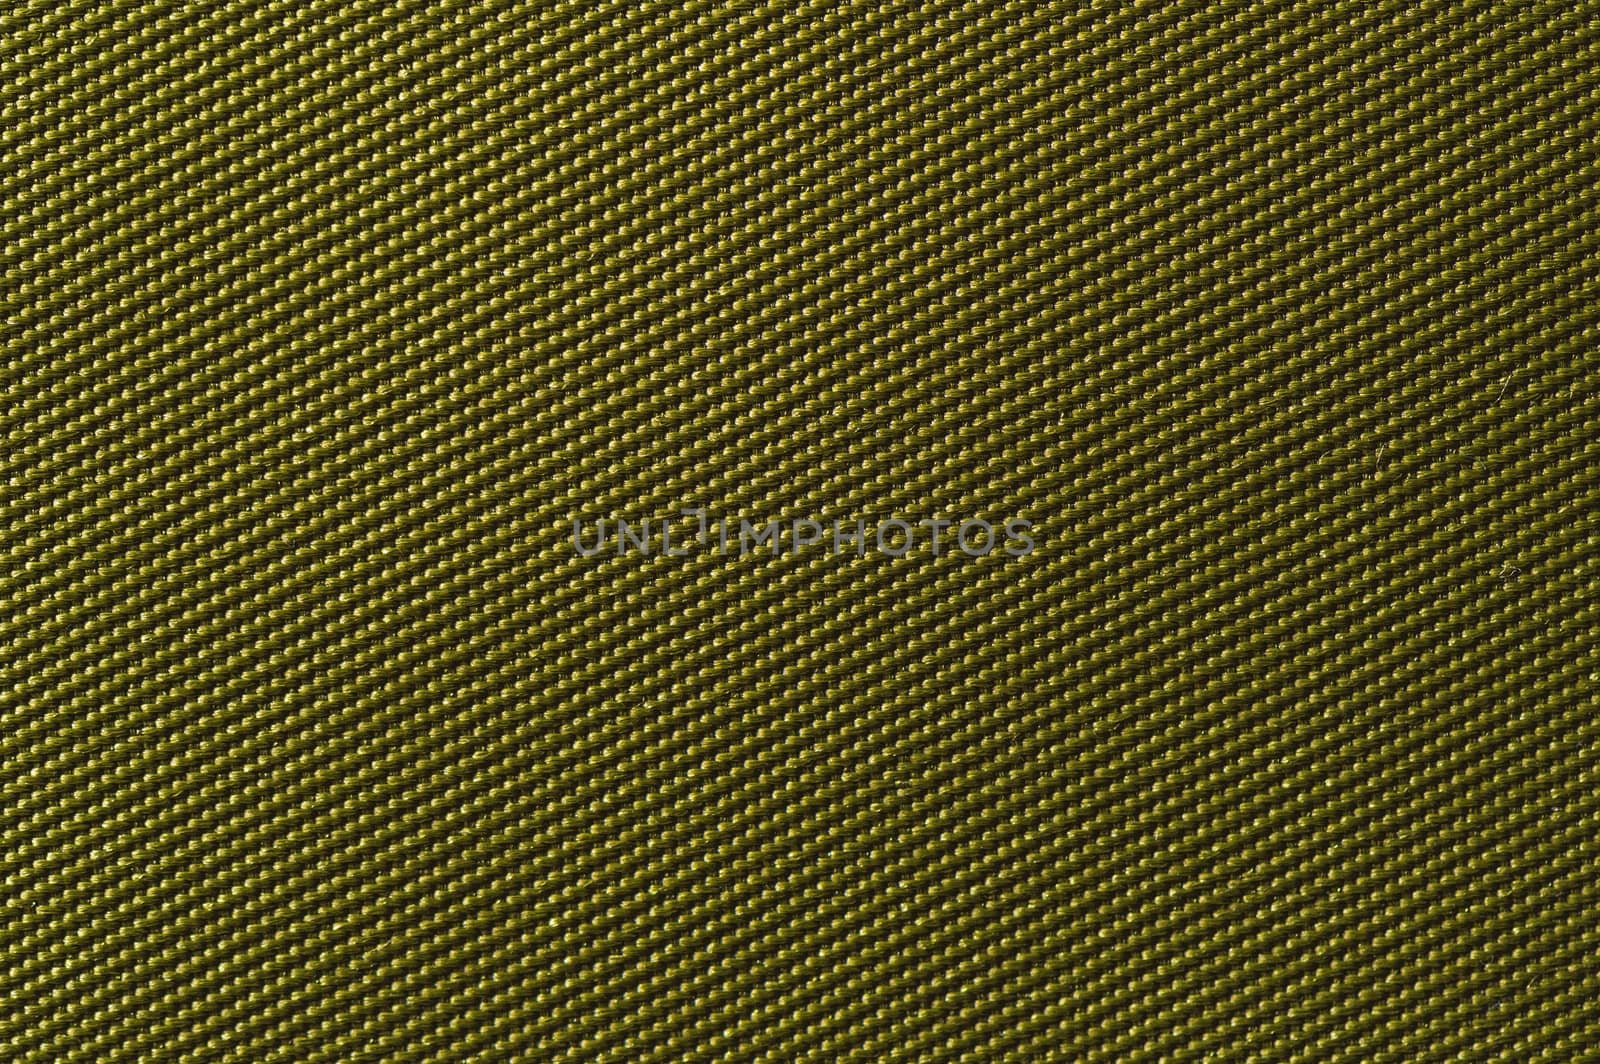 Yellow dots on black base textile background